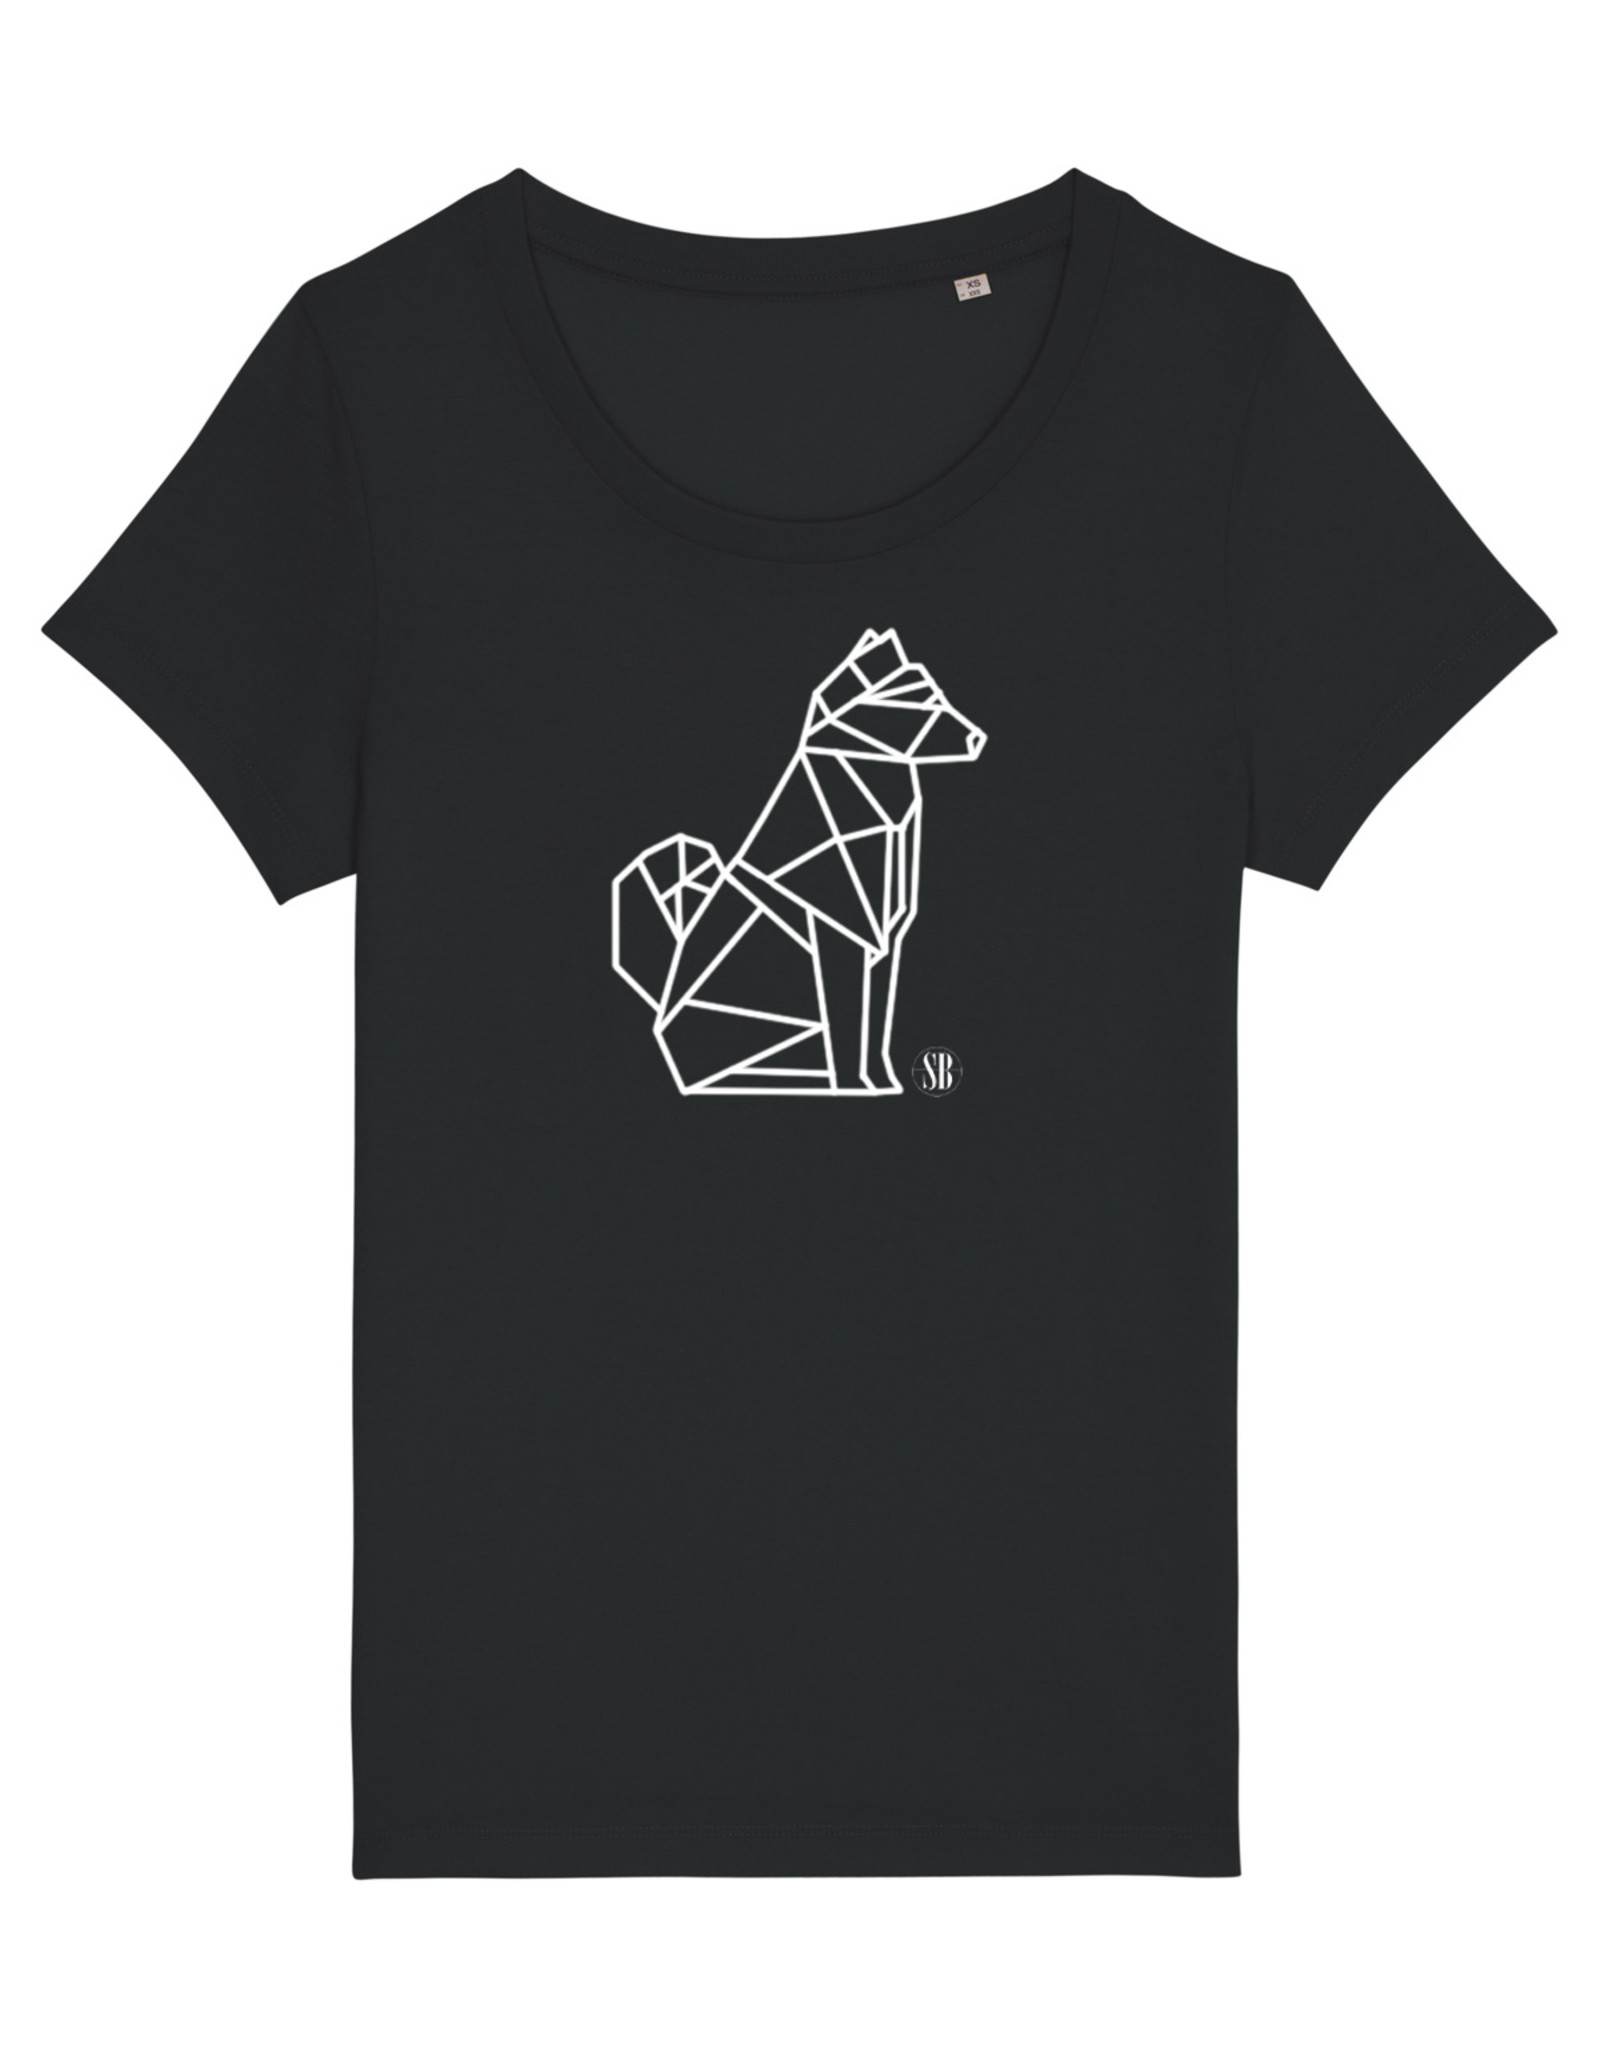 Shiba Boutique Geometric Shiba Sitting T-shirt Women